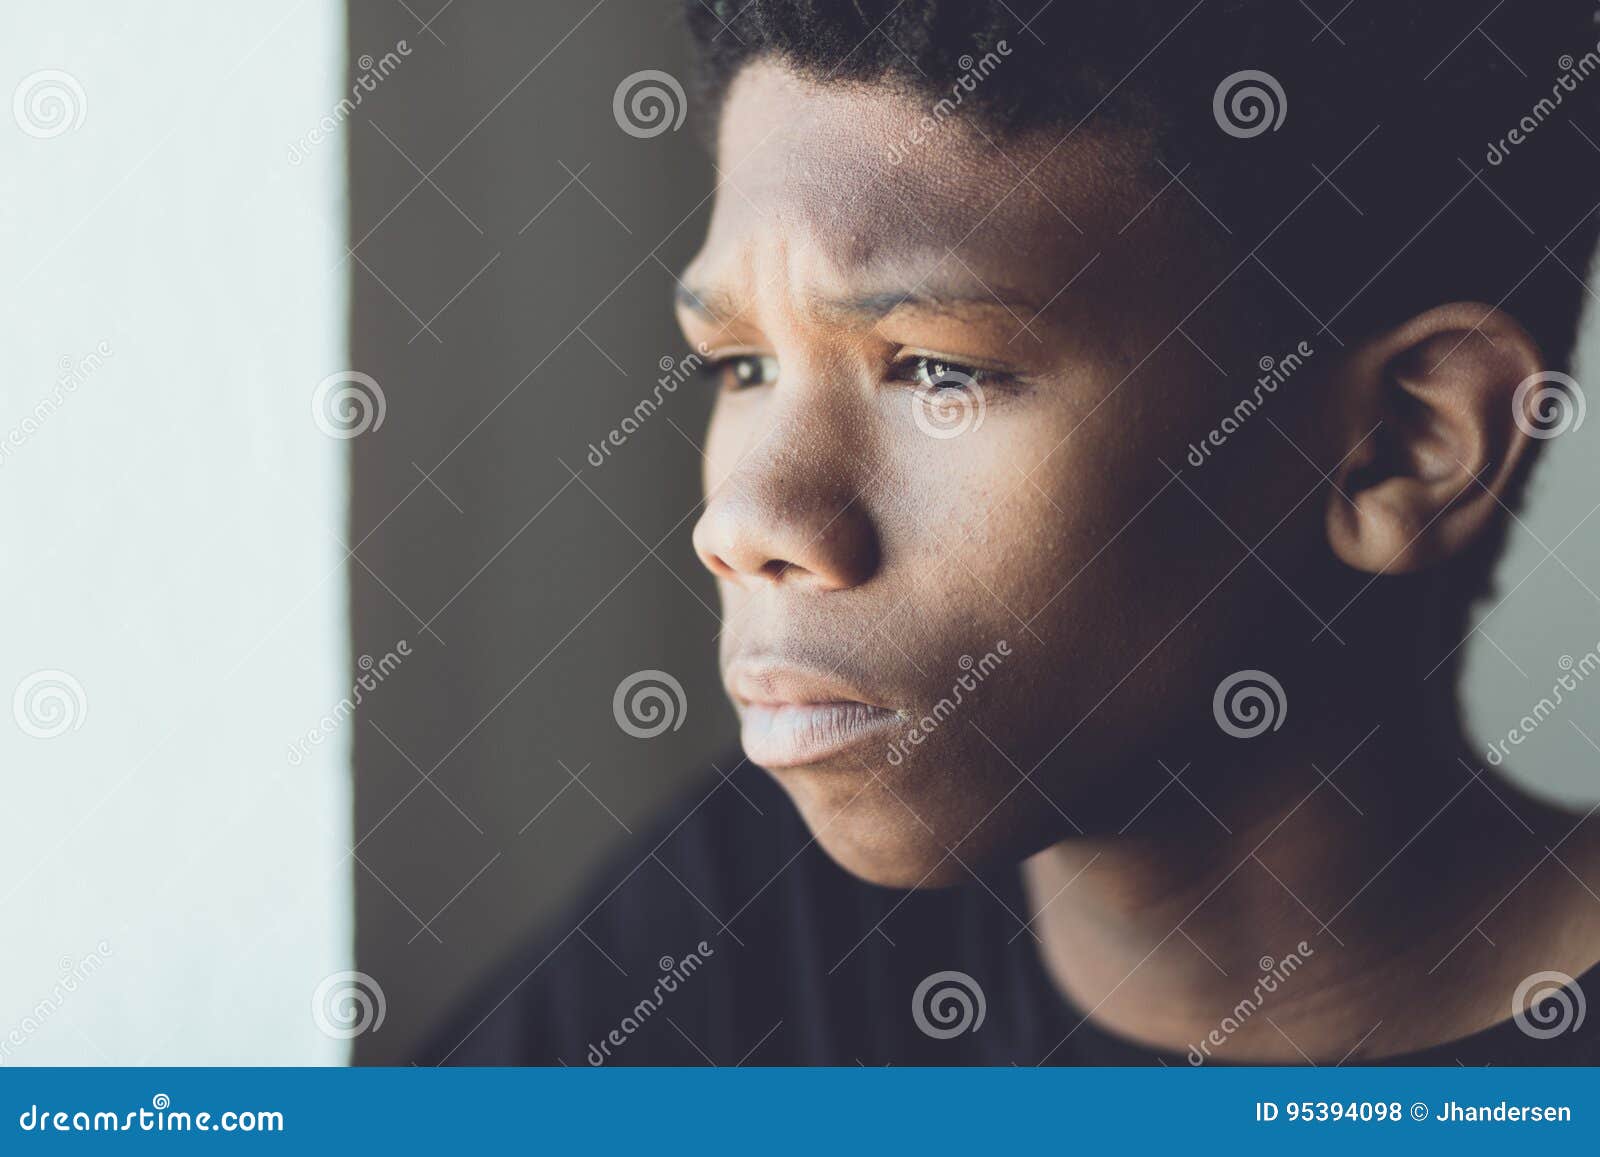 faded retro portrait of a worried african boy